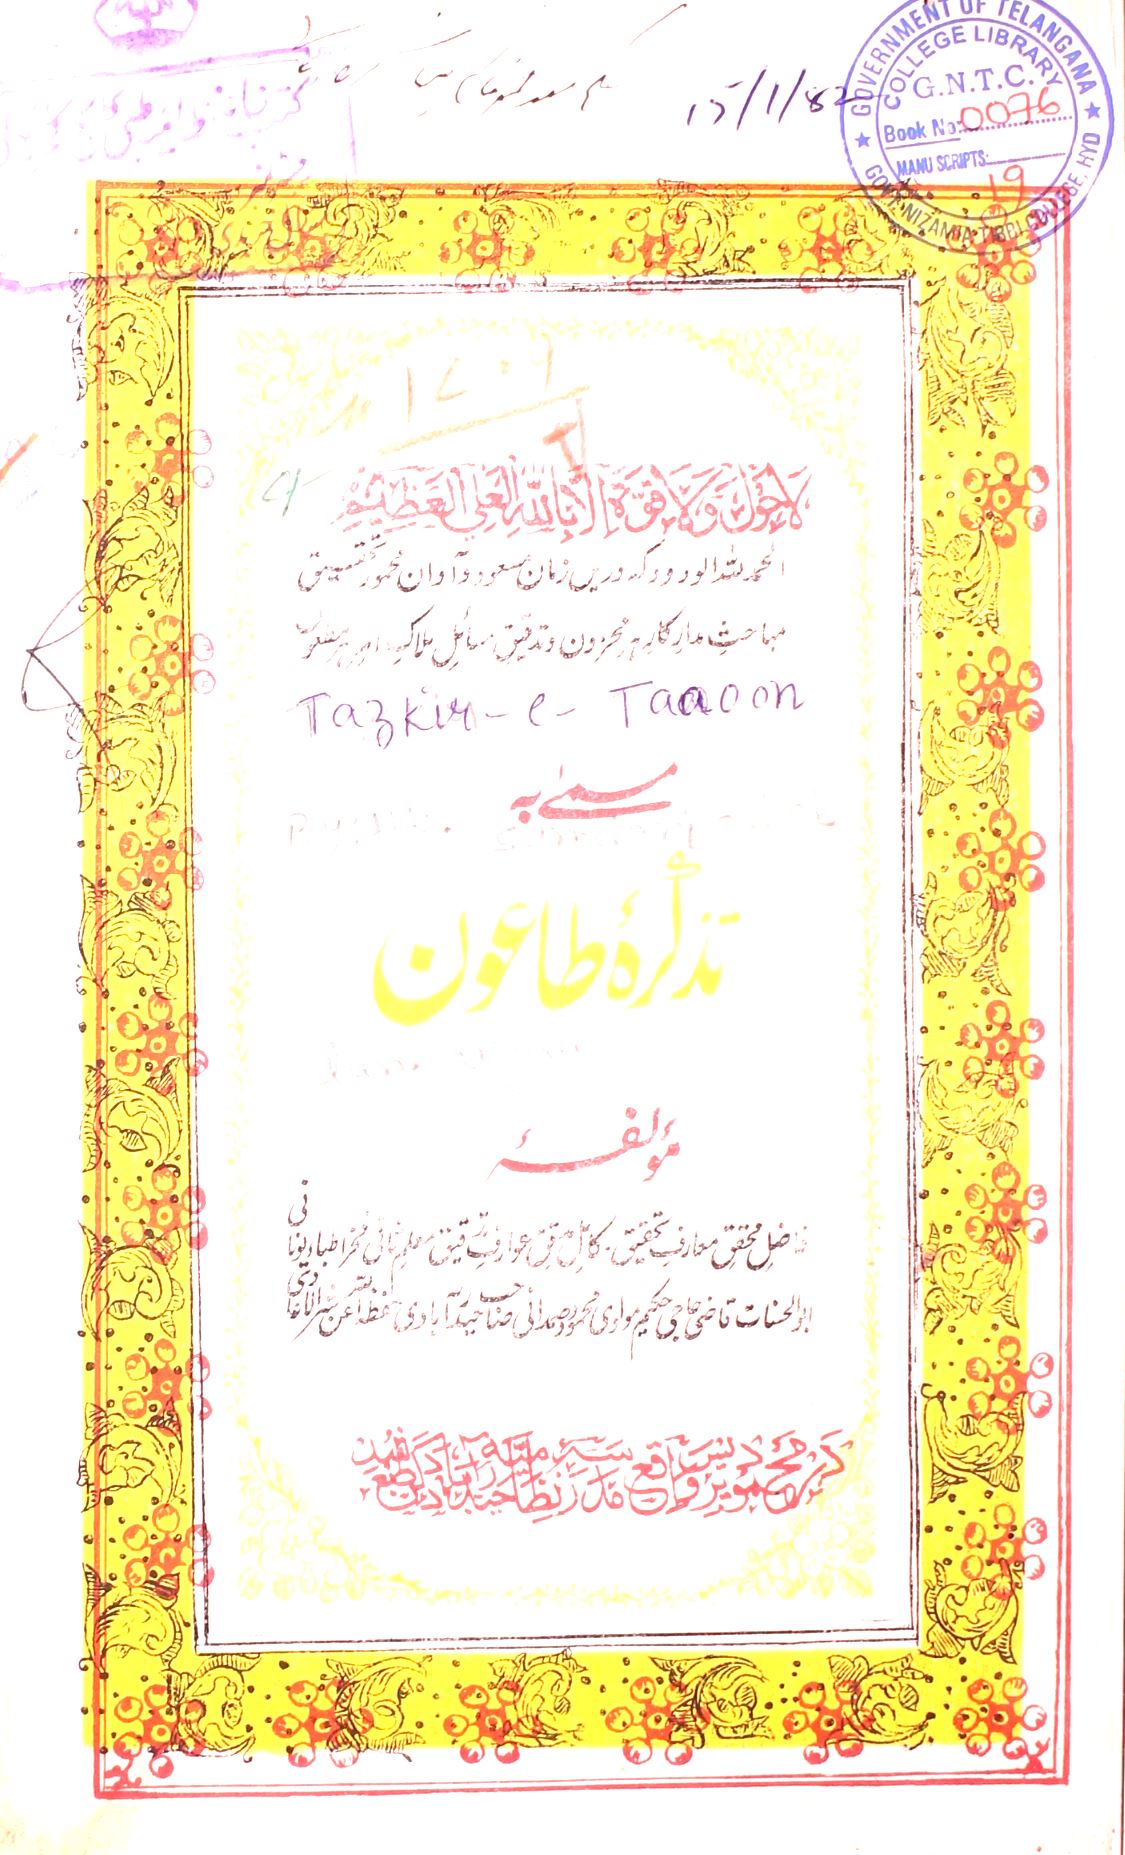 Tazkir-e-Taoon